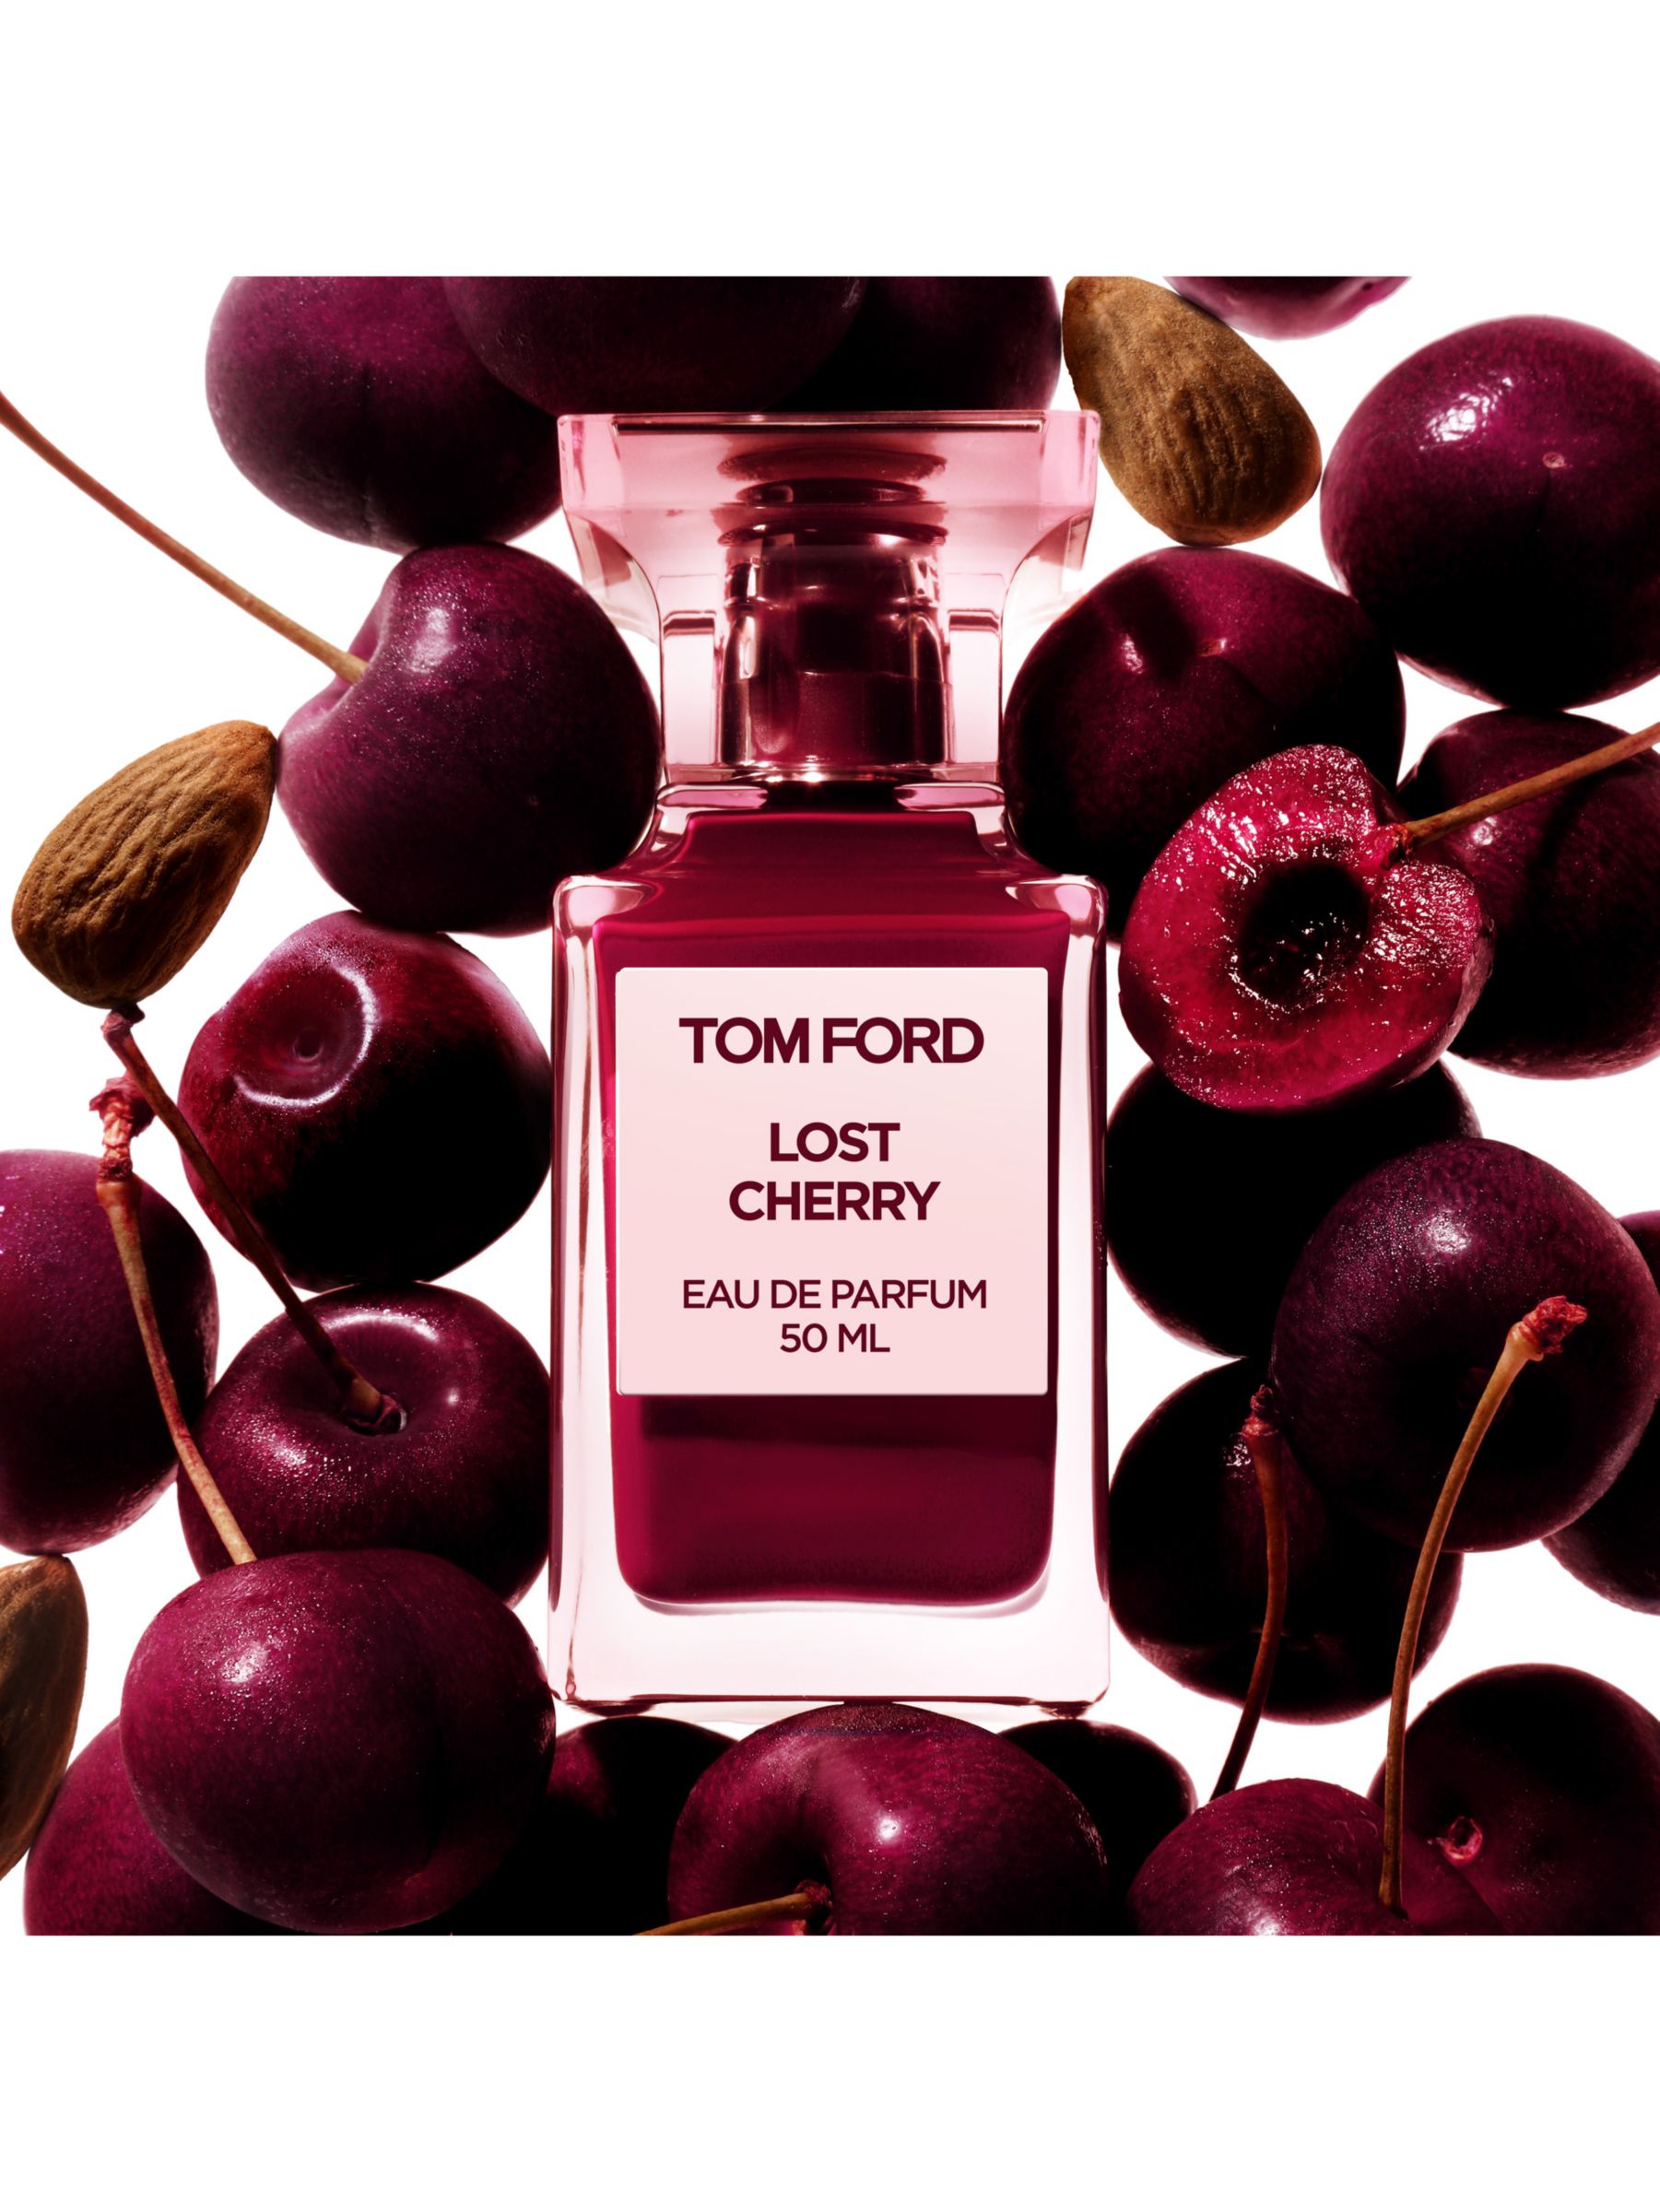 TOM FORD Private Blend Lost Cherry Eau de Parfum, 50ml at John Lewis Partners